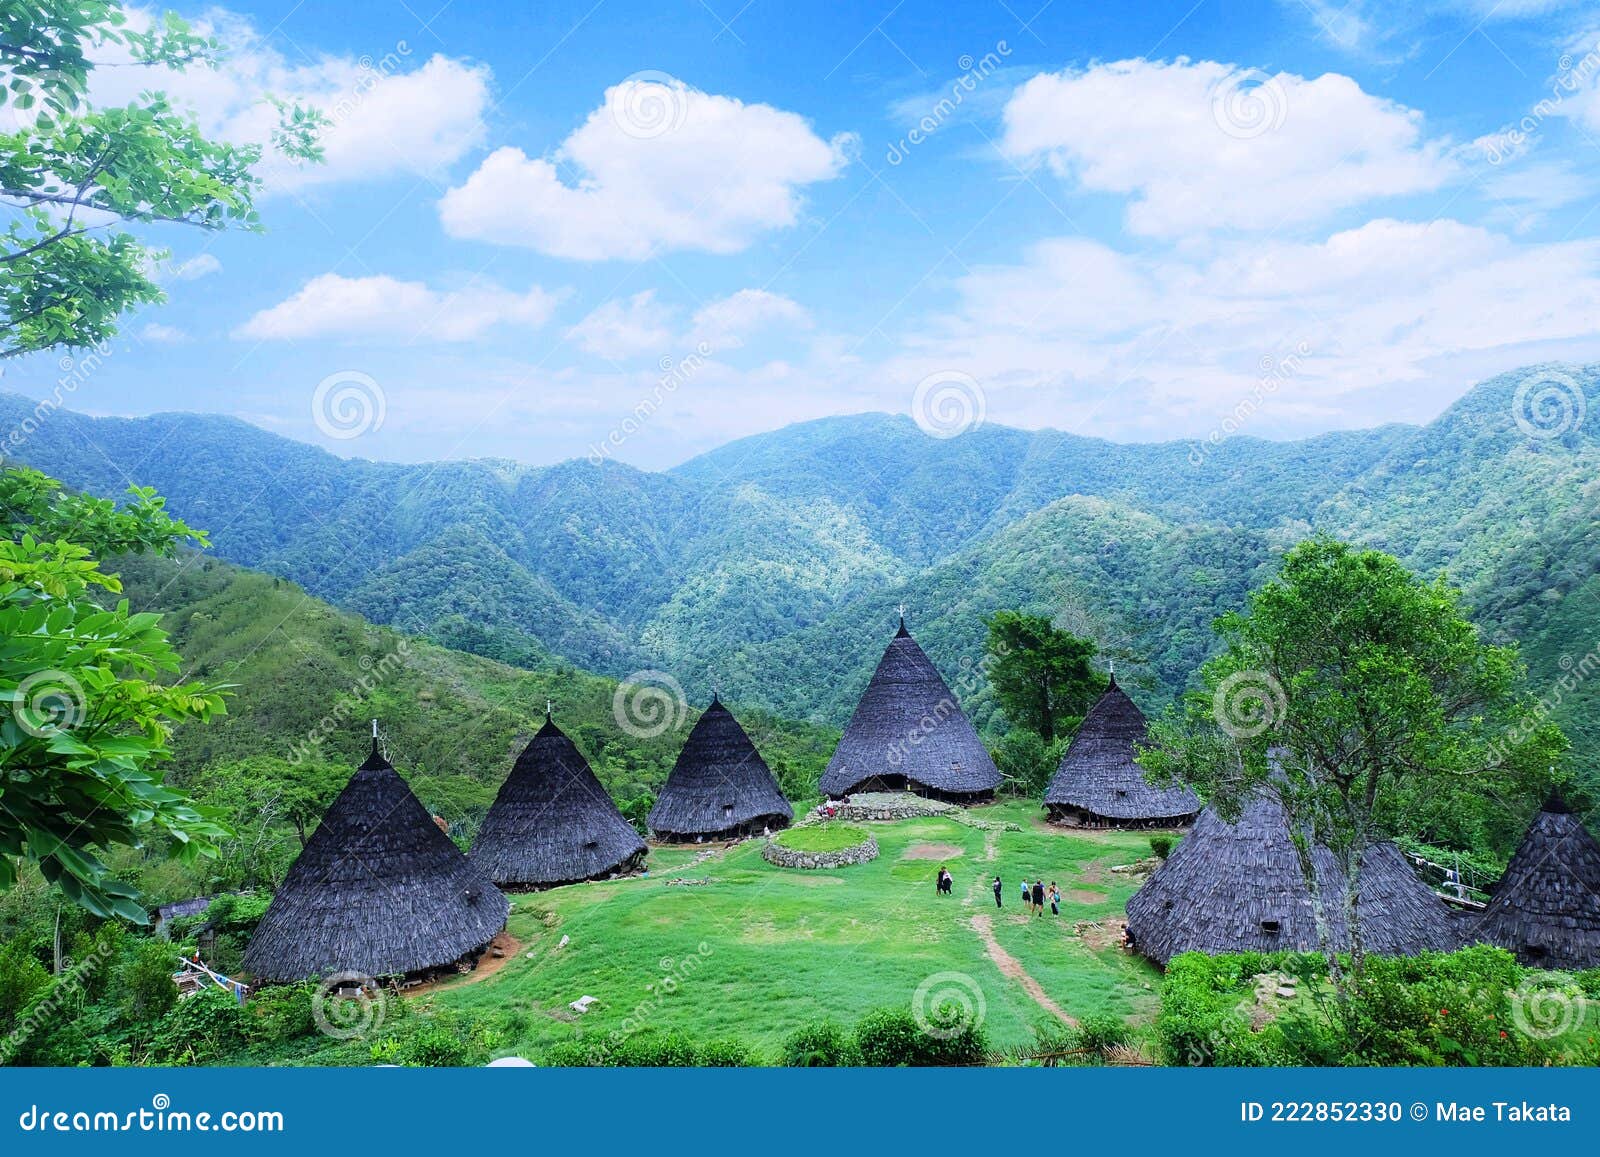 wae rebo village & x28;country above the clouds, east nusa tenggara indonesia